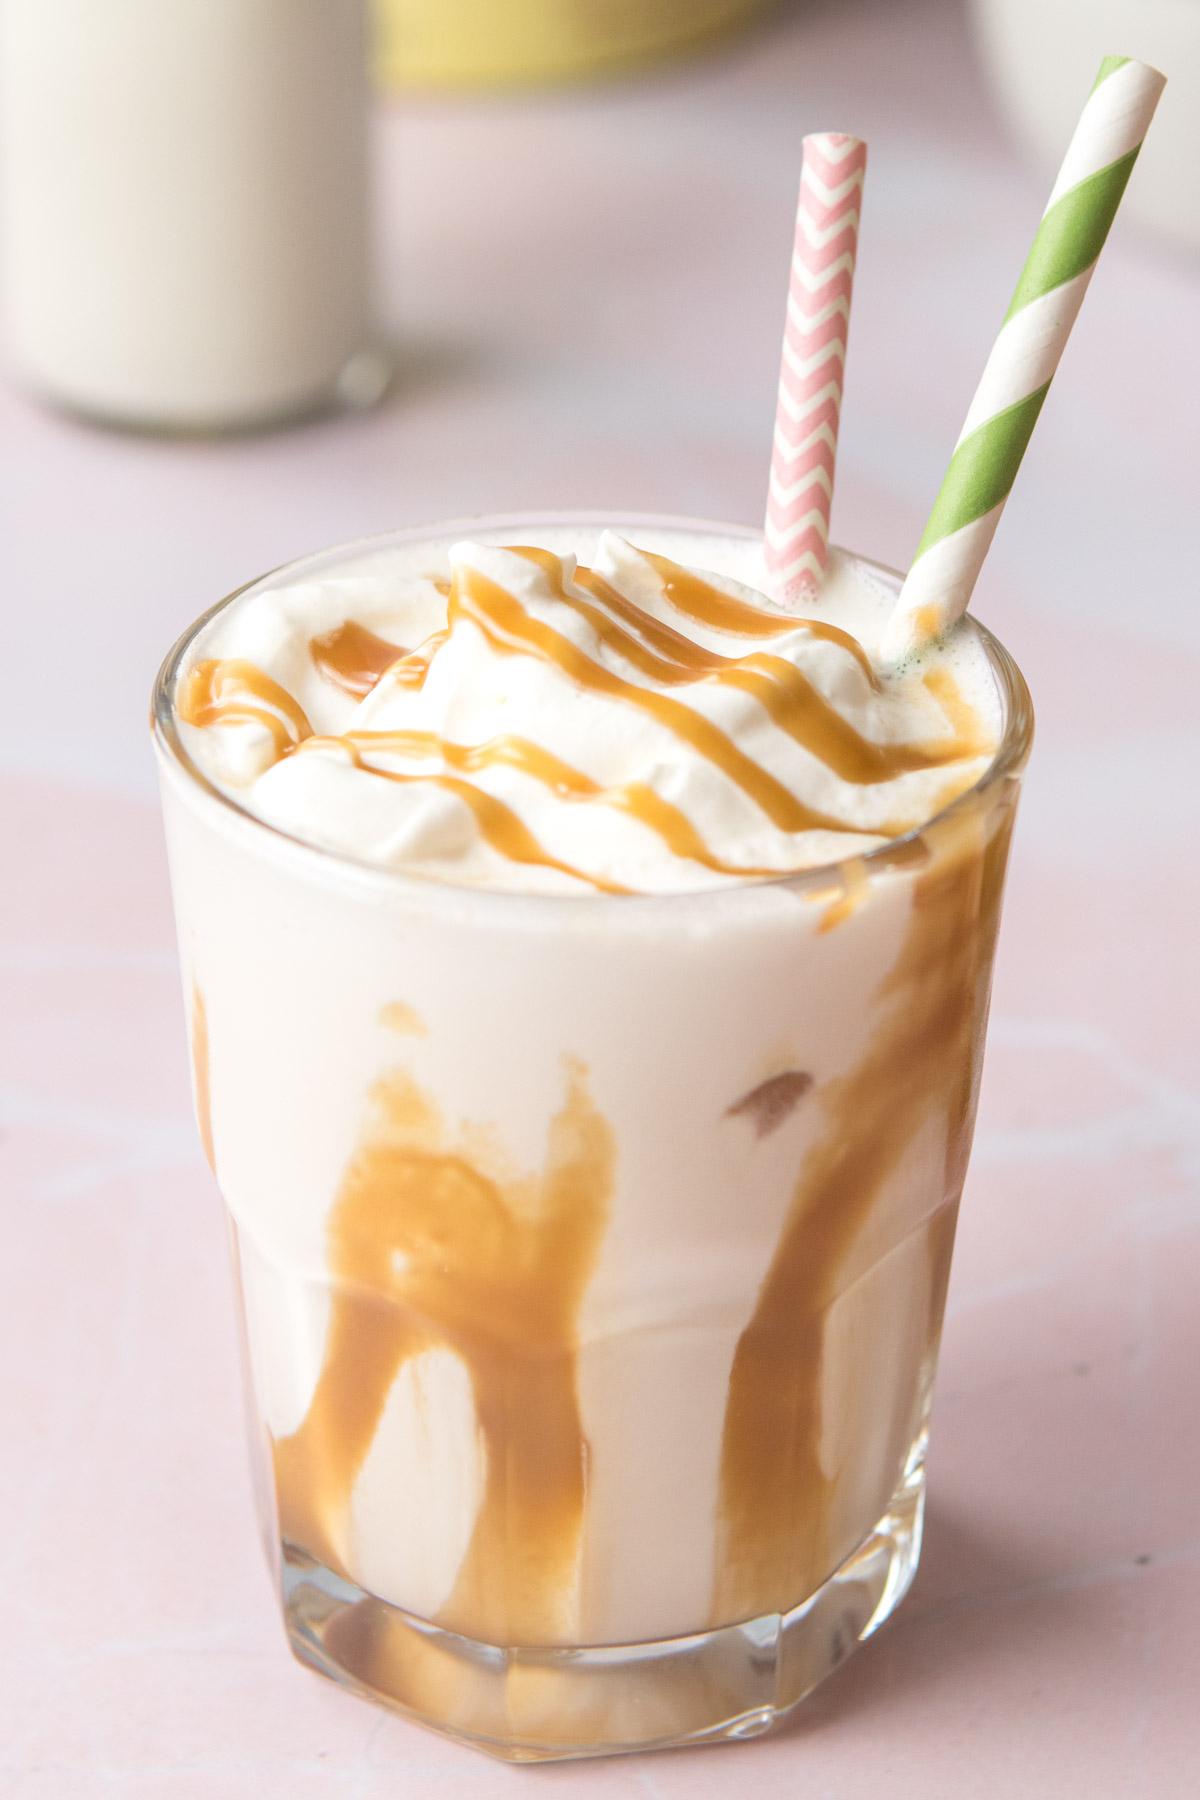 milkshake with drizzled caramel on it